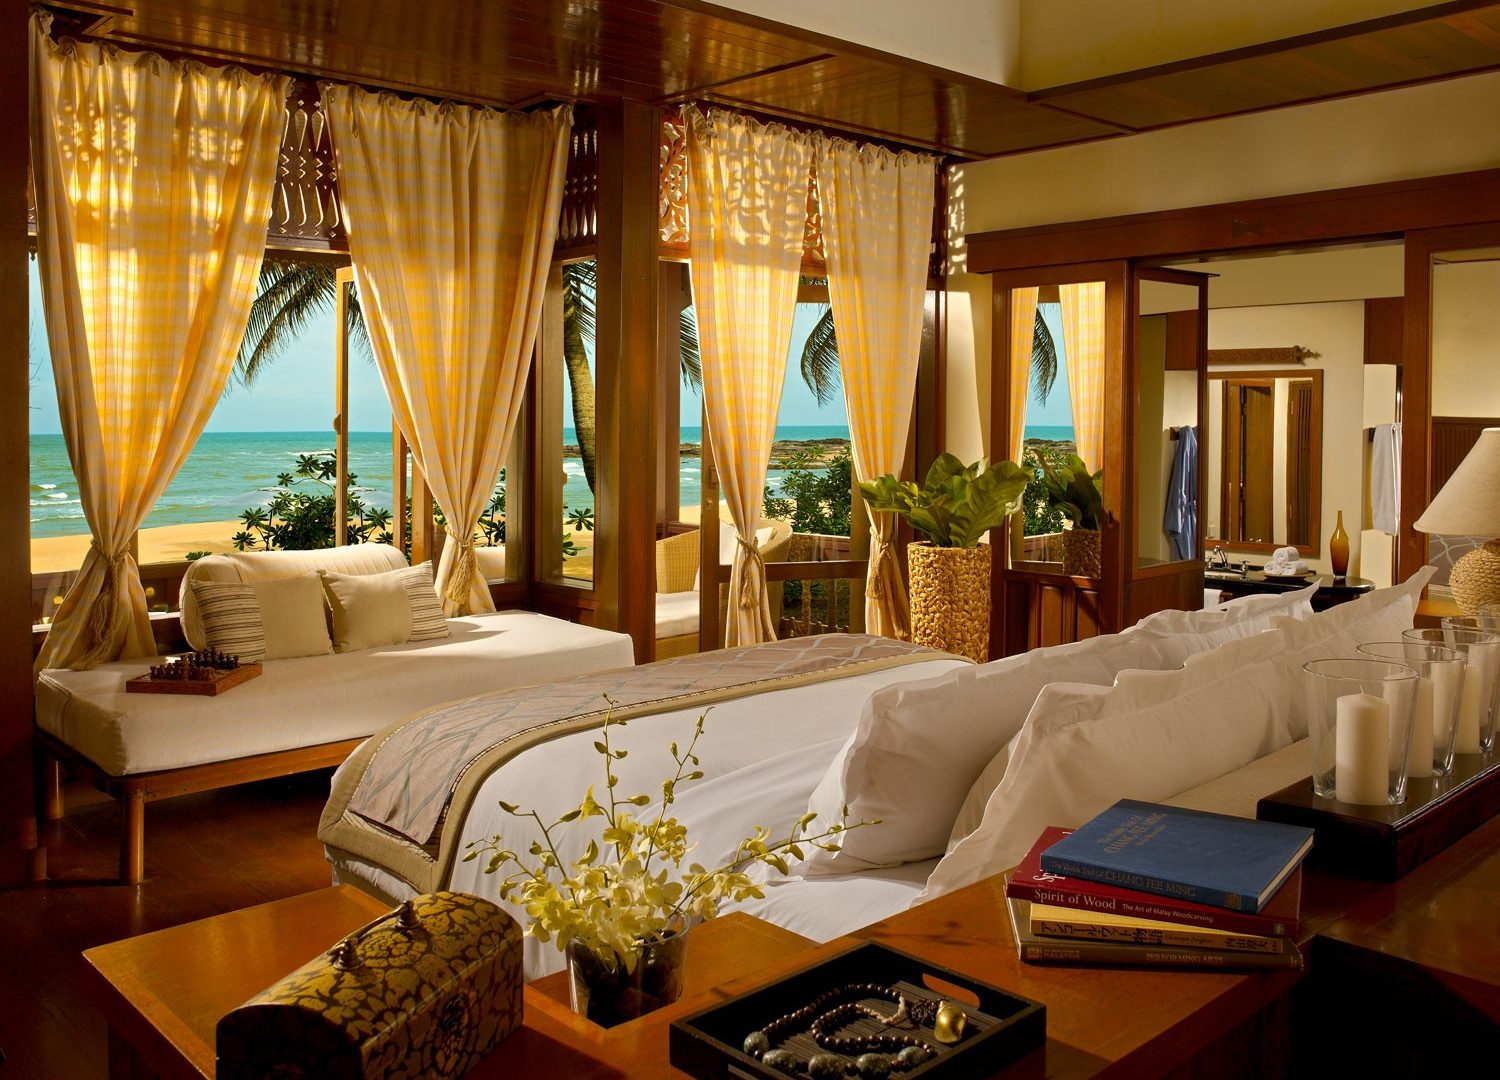 Malaysia Hotel Room Bedroom Interior Interior Design Beach Ocean View Bed 1500x1080